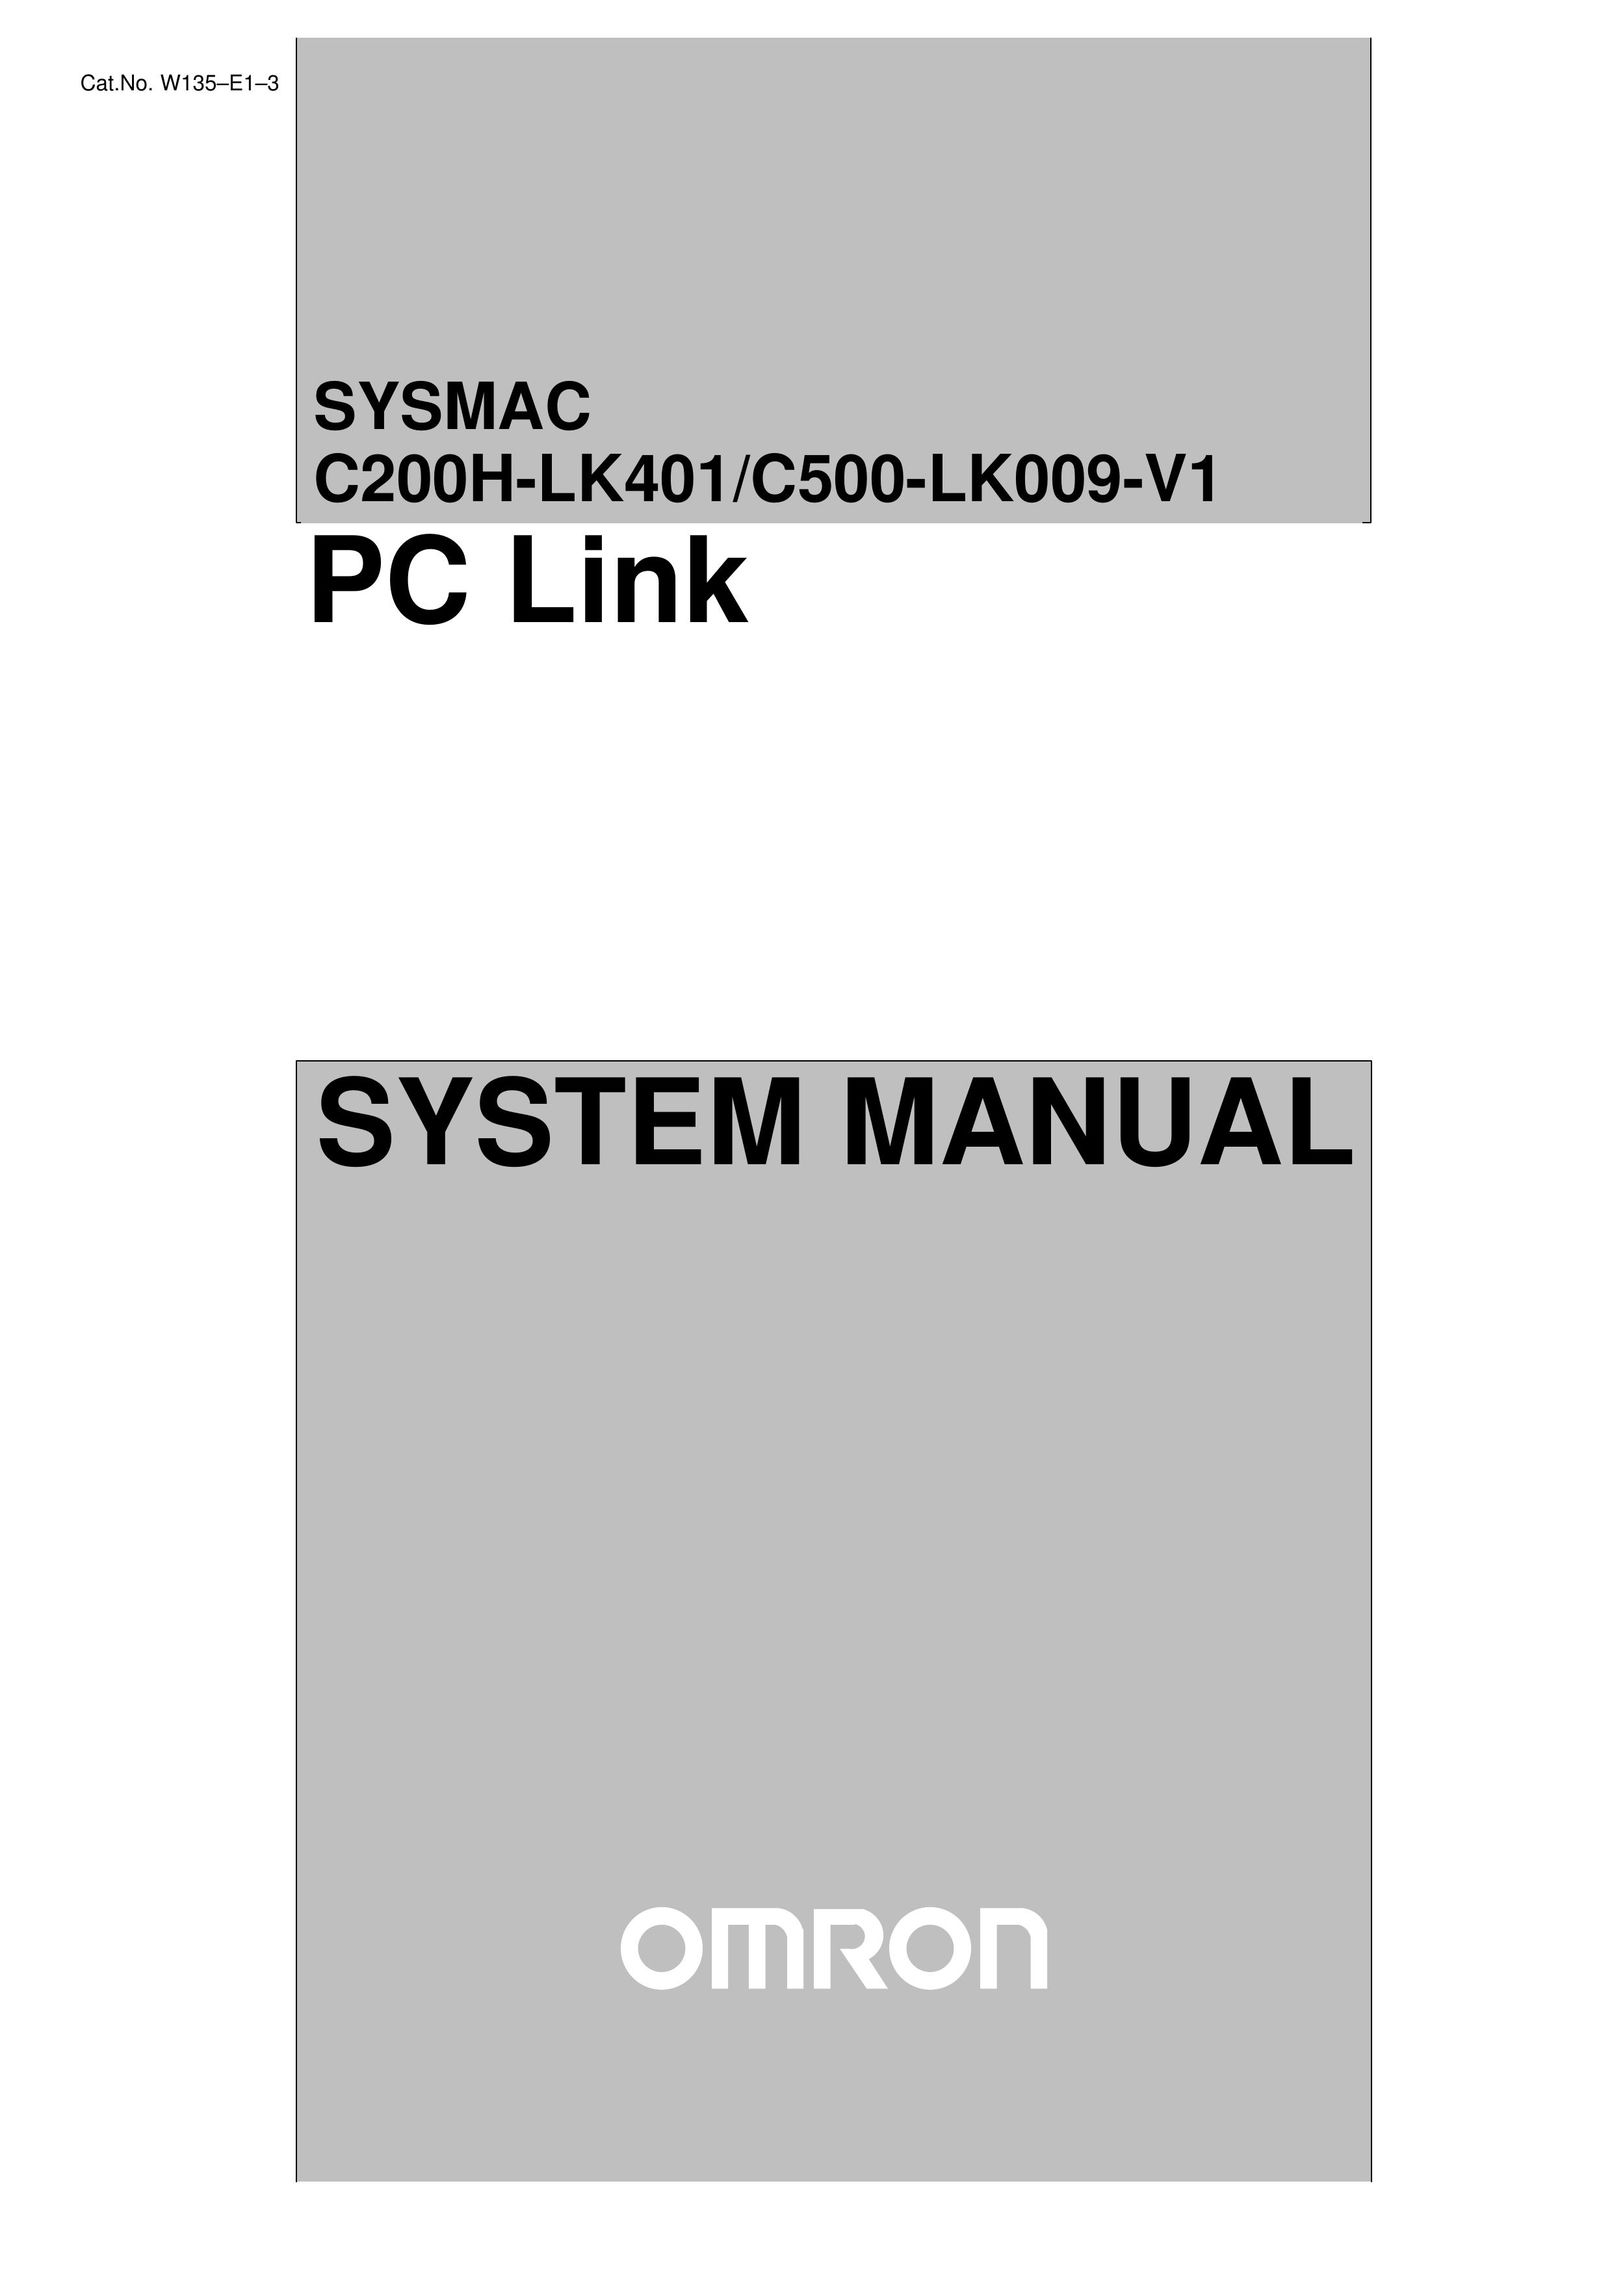 Omron C500-LK009-V1 Network Card User Manual